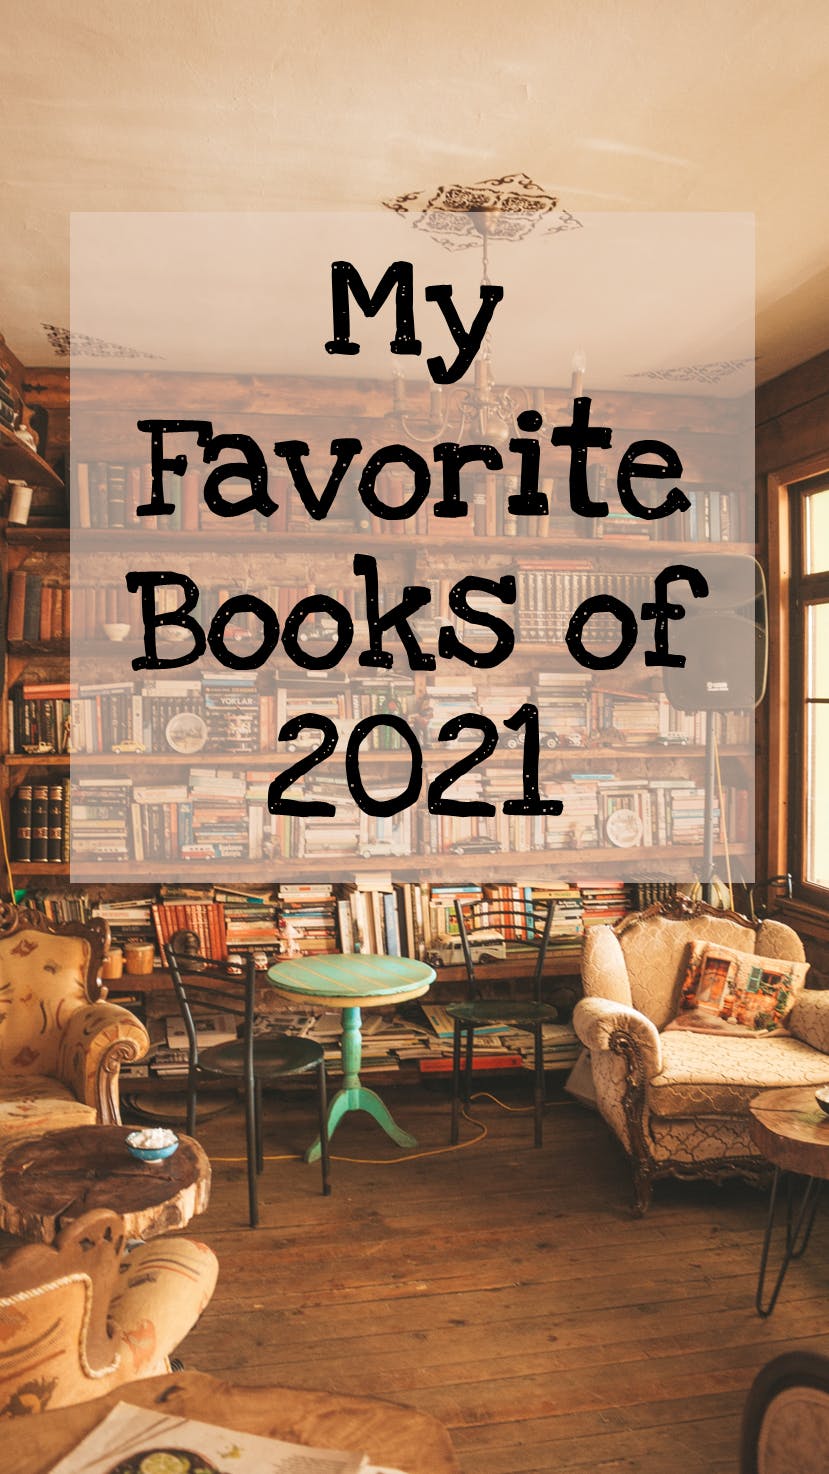 Favorite Books of 2021